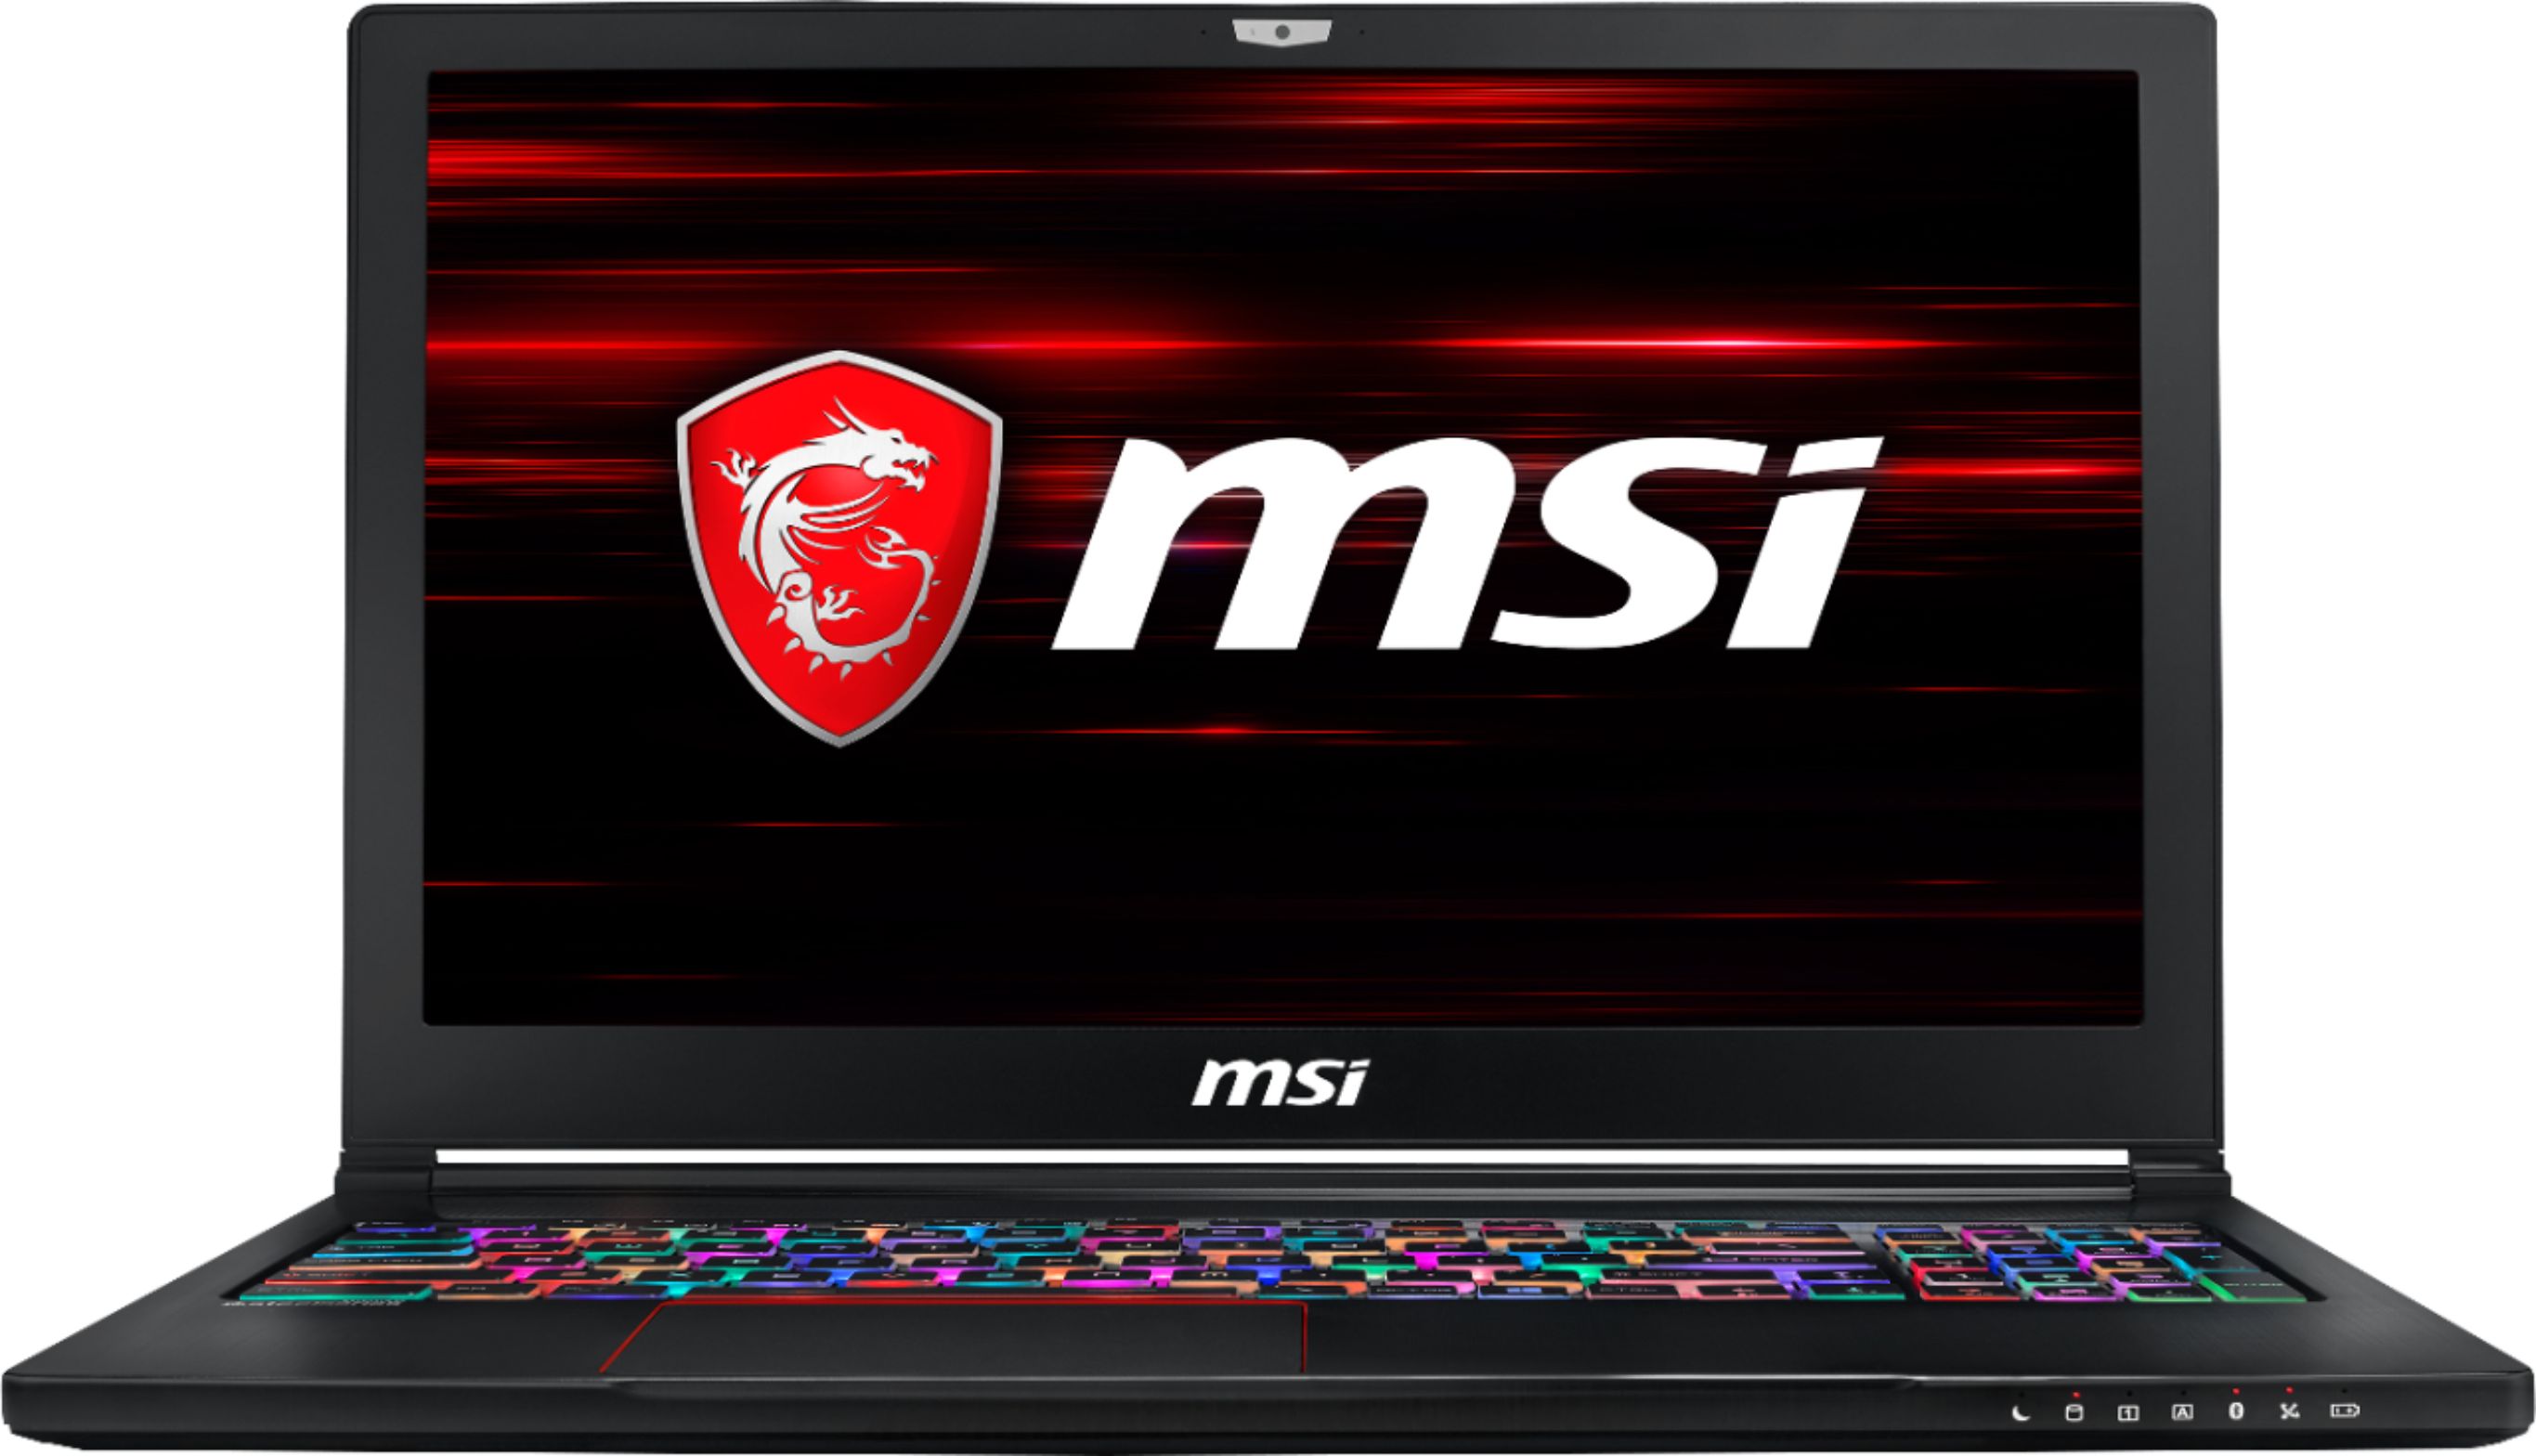 Buy: MSI 15.6" Gaming Laptop Intel Core i7 16GB Memory NVIDIA GeForce GTX 1060 1TB Hard Drive + 256GB Solid State Drive Aluminum Black GS63 STEALTH-010